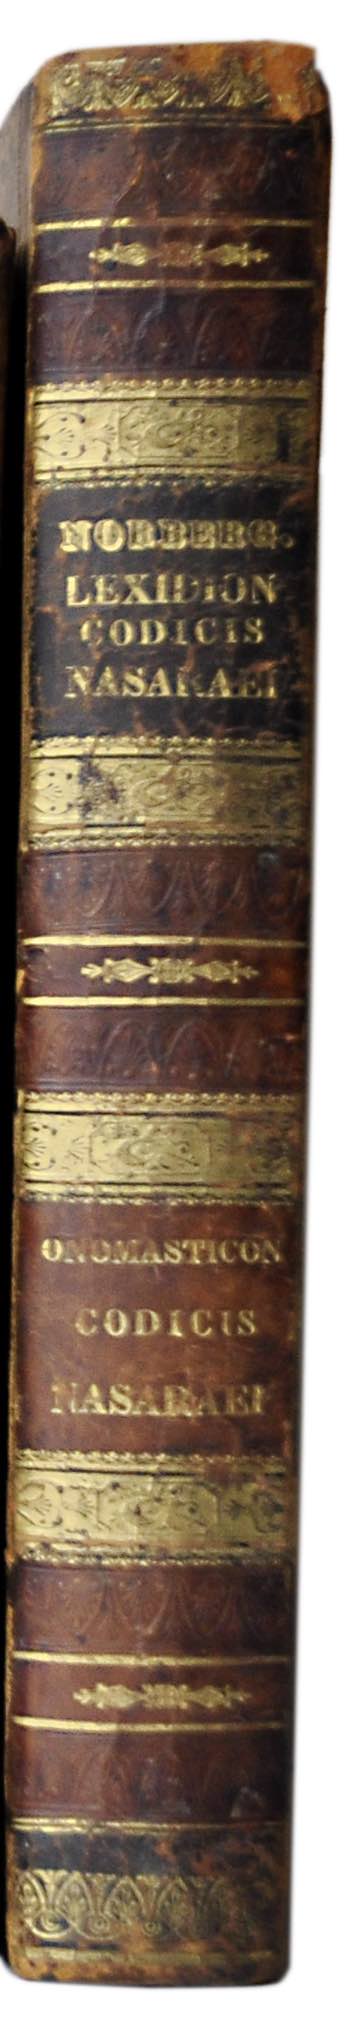 NORBERG, MATTHIAS (Ed.): - Lexidion Codicis Nasaraei, cui liber Adami nomen. AND: Onomasticon Codicis Nasaraei, cui liber Adami nomen. Two volumes in one. Lund, Berglingianis, 1816 & 1817.